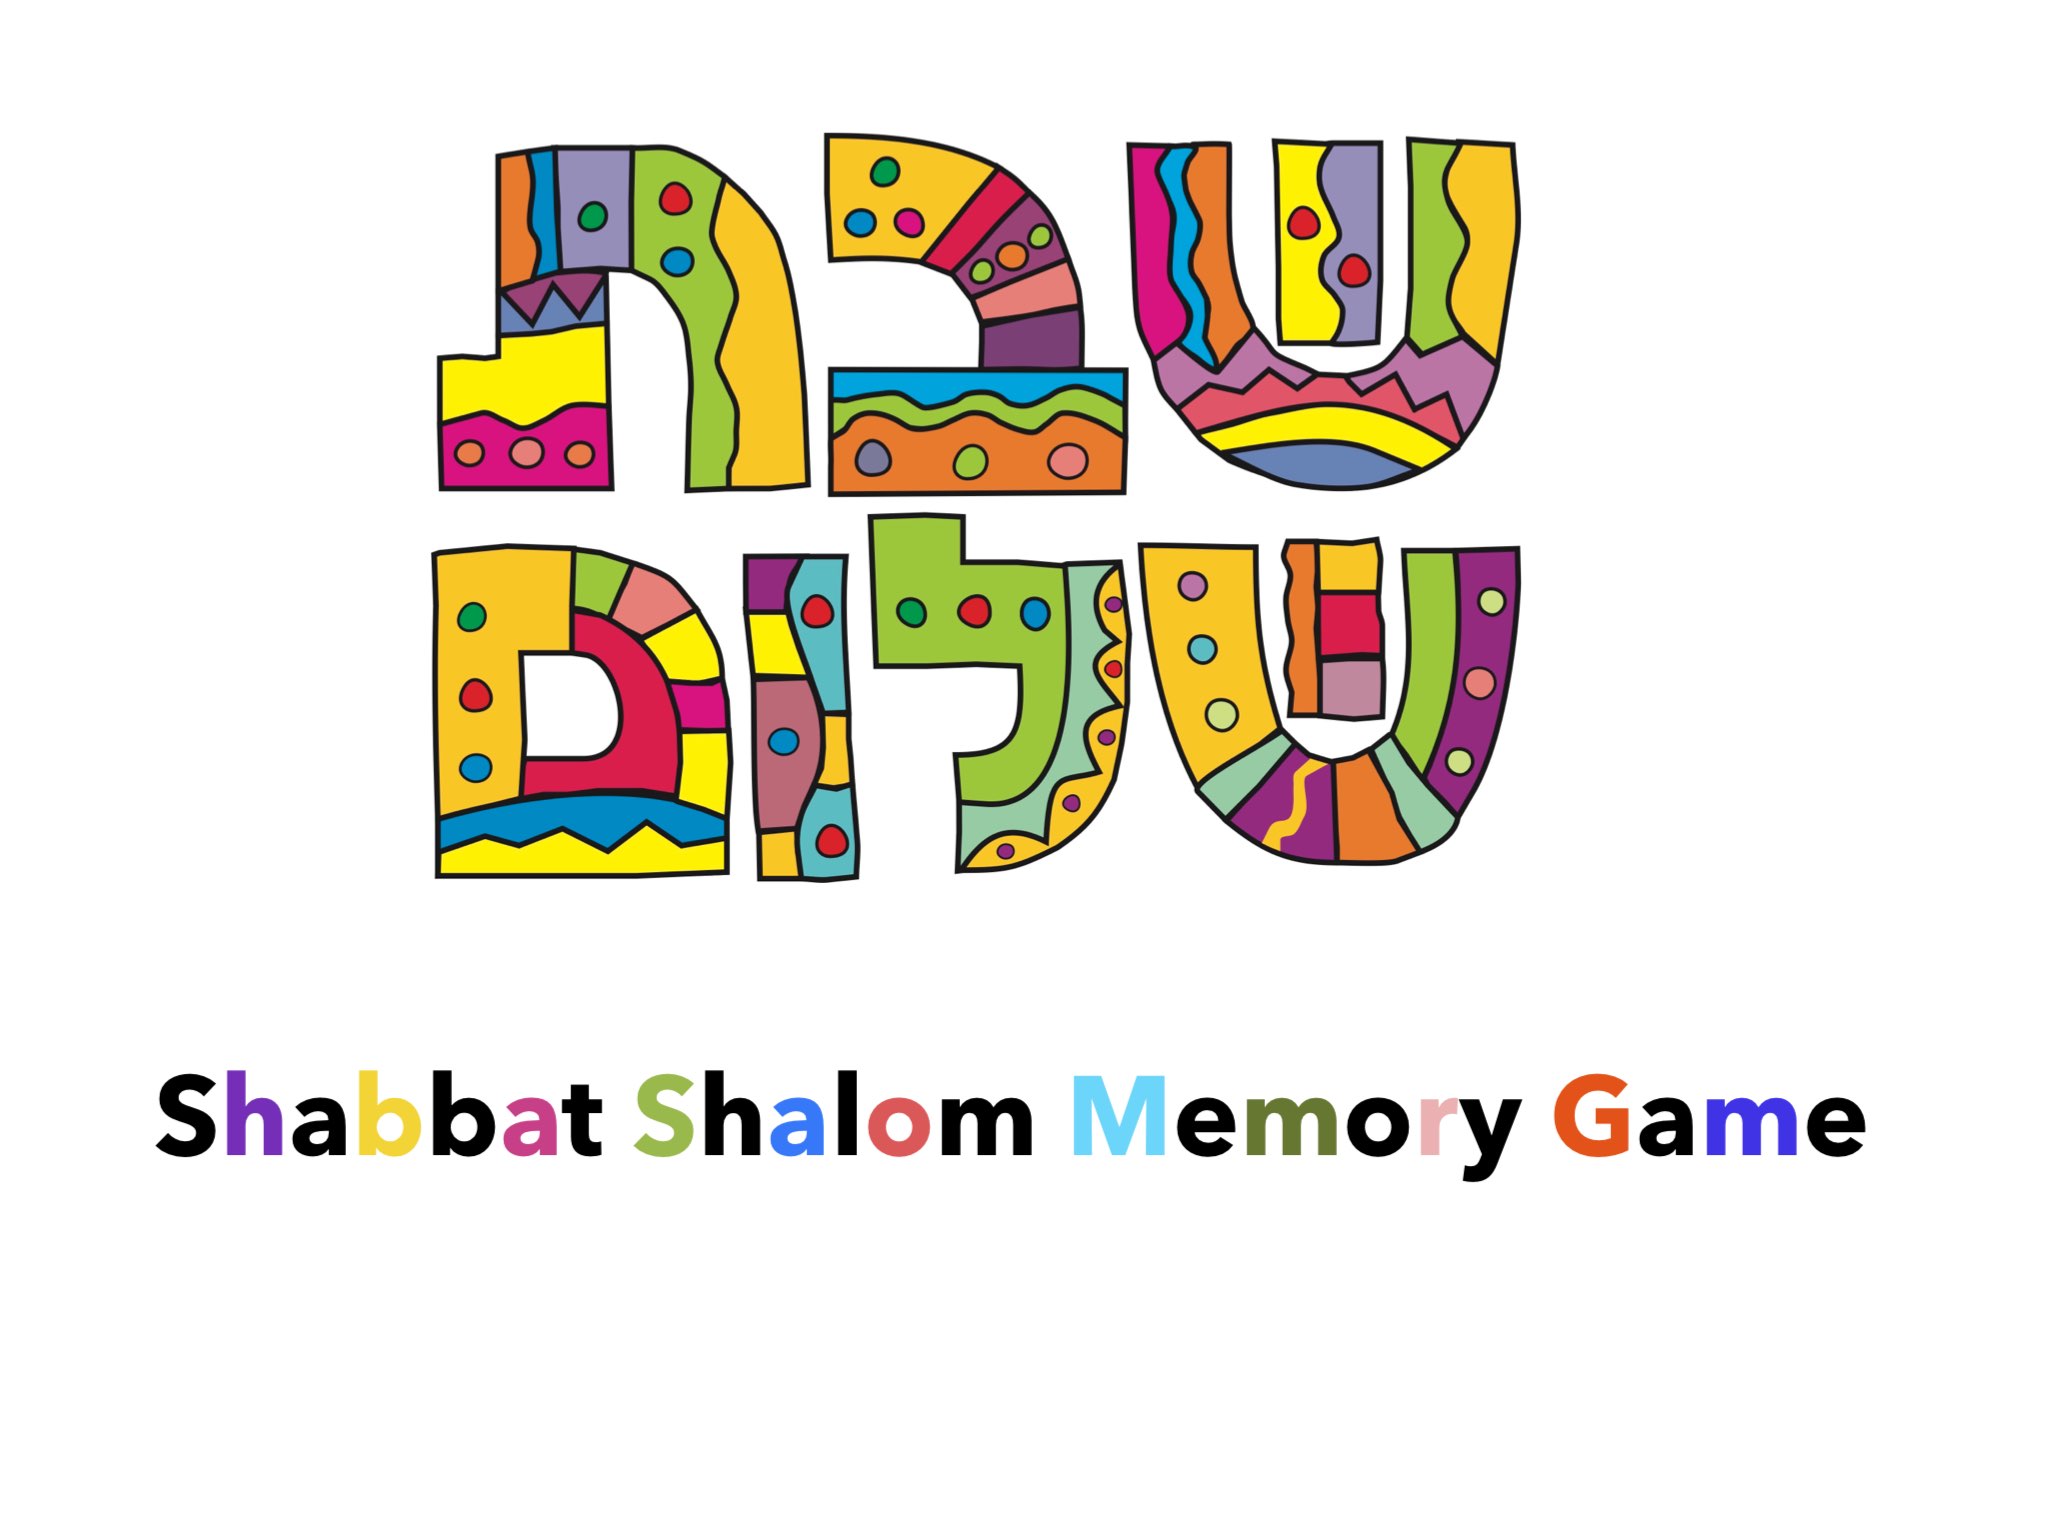 Shabbat Shalom Memory Game By Ji Team Carina Educational Games For Kids On Ji Tap